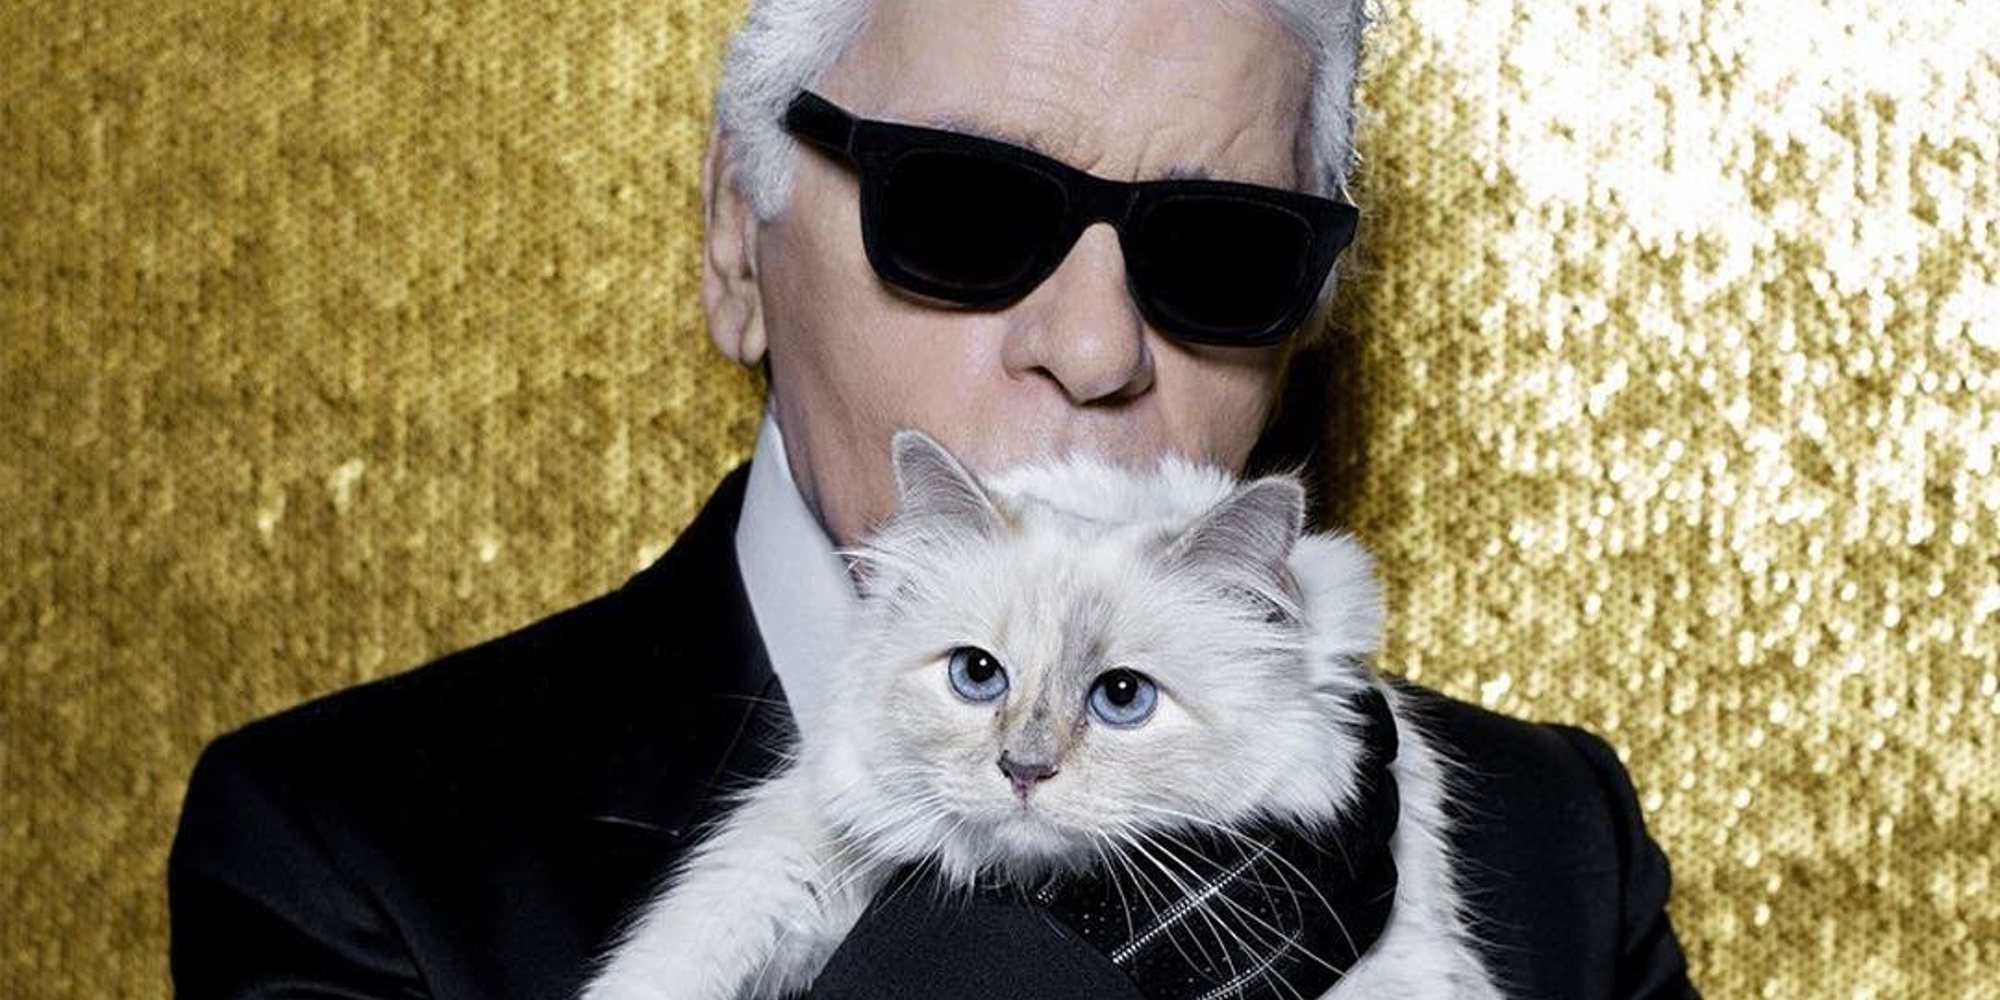 La gata de Karl Lagerfeld, la mayor heredera de su millonaria fortuna